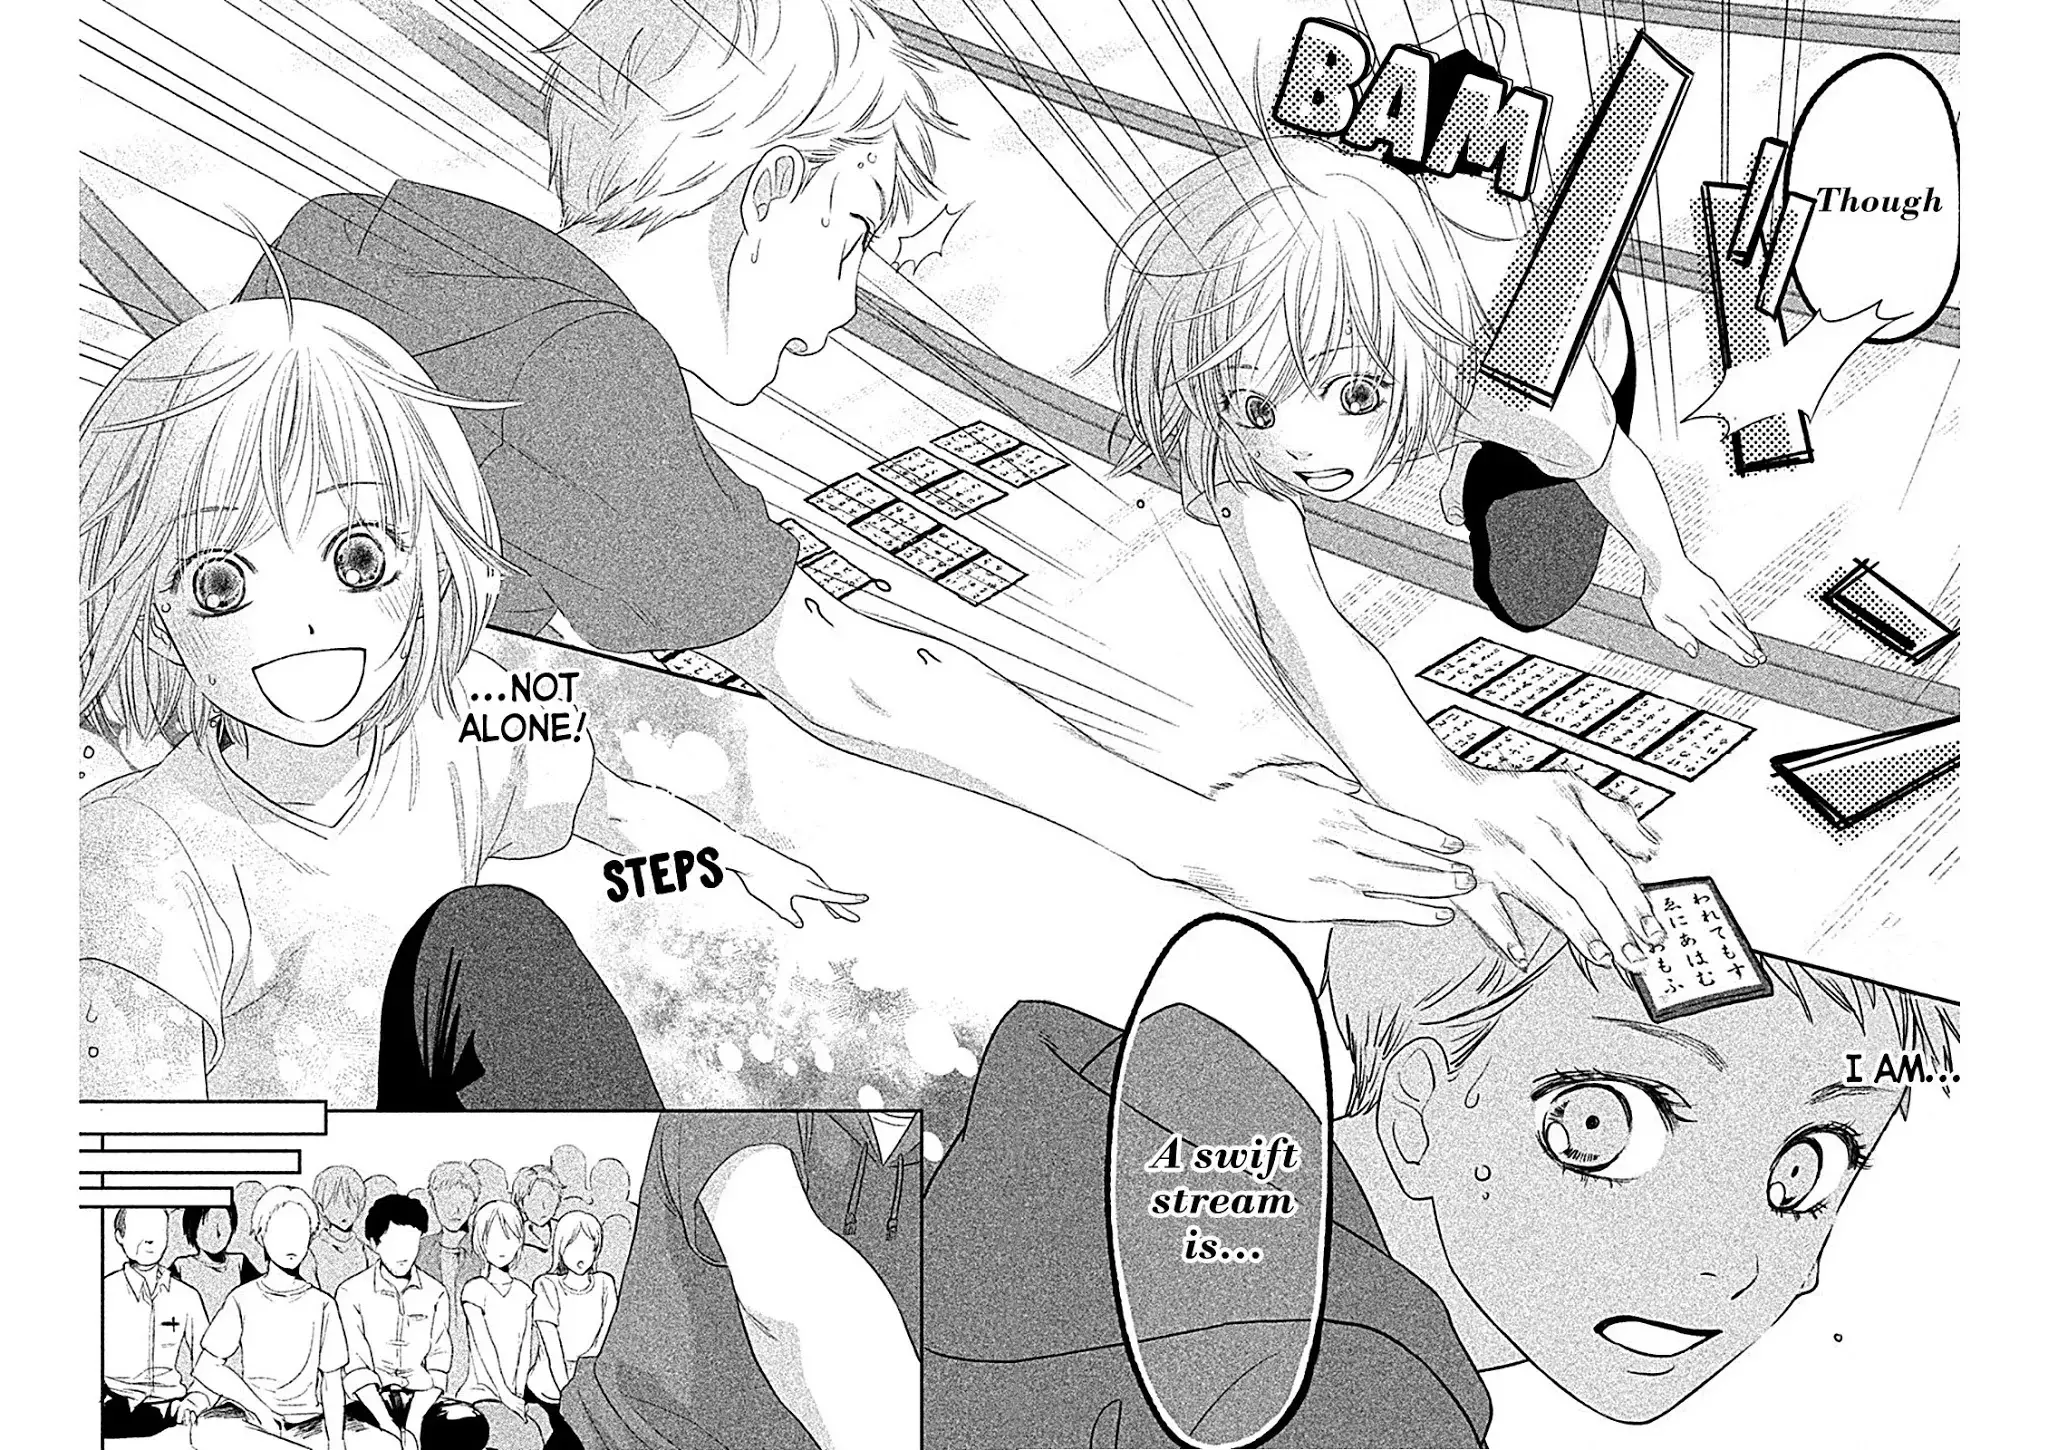 Chihayafuru: Middle School Arc - 1 page 26